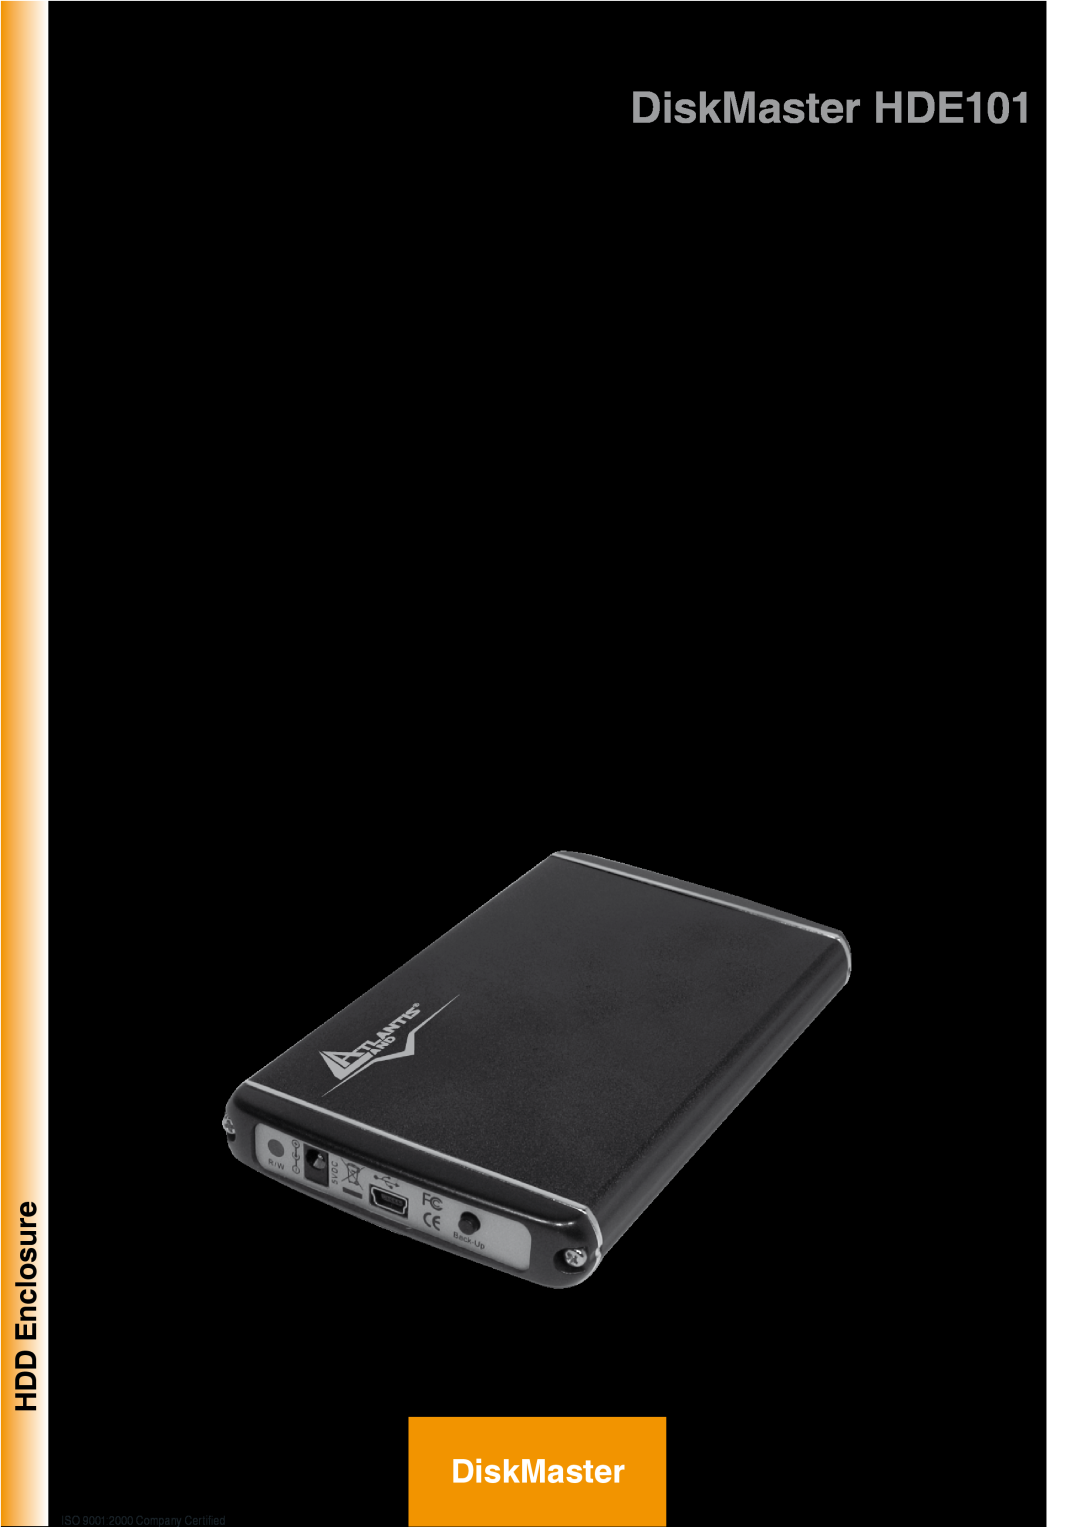 Atlantis Land manual DiskMaster HDE101, A06-HDE1012,5” Easy Backup Storage Device, HDD Enclosure 